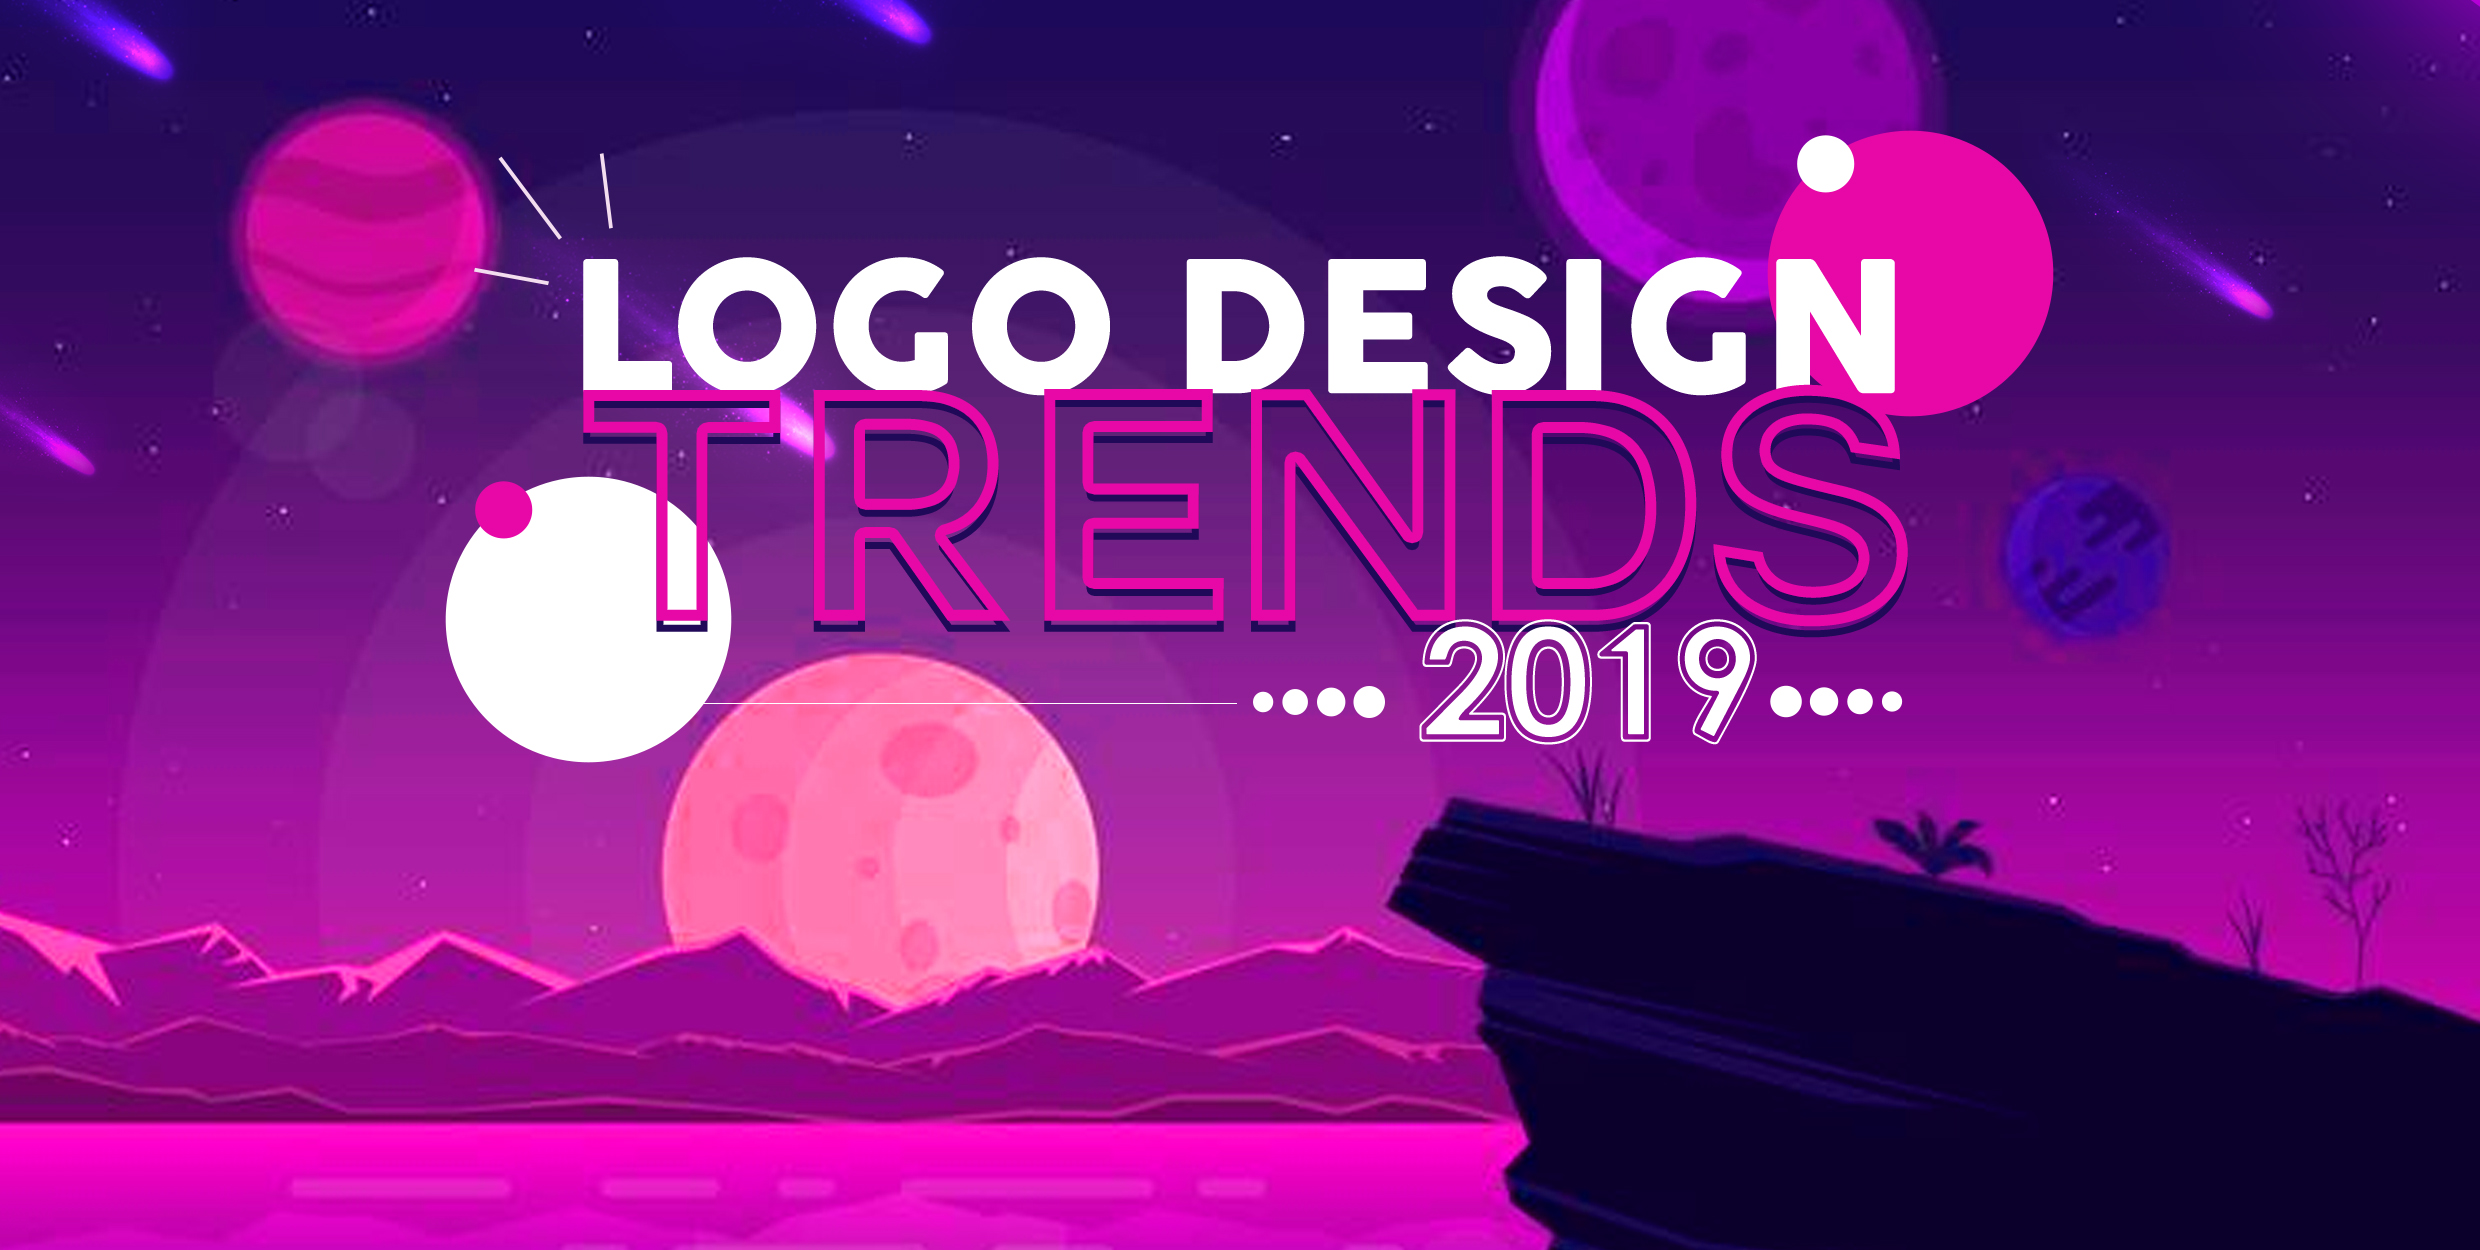 5 innovative logo design trends of 2019 [Infographic]